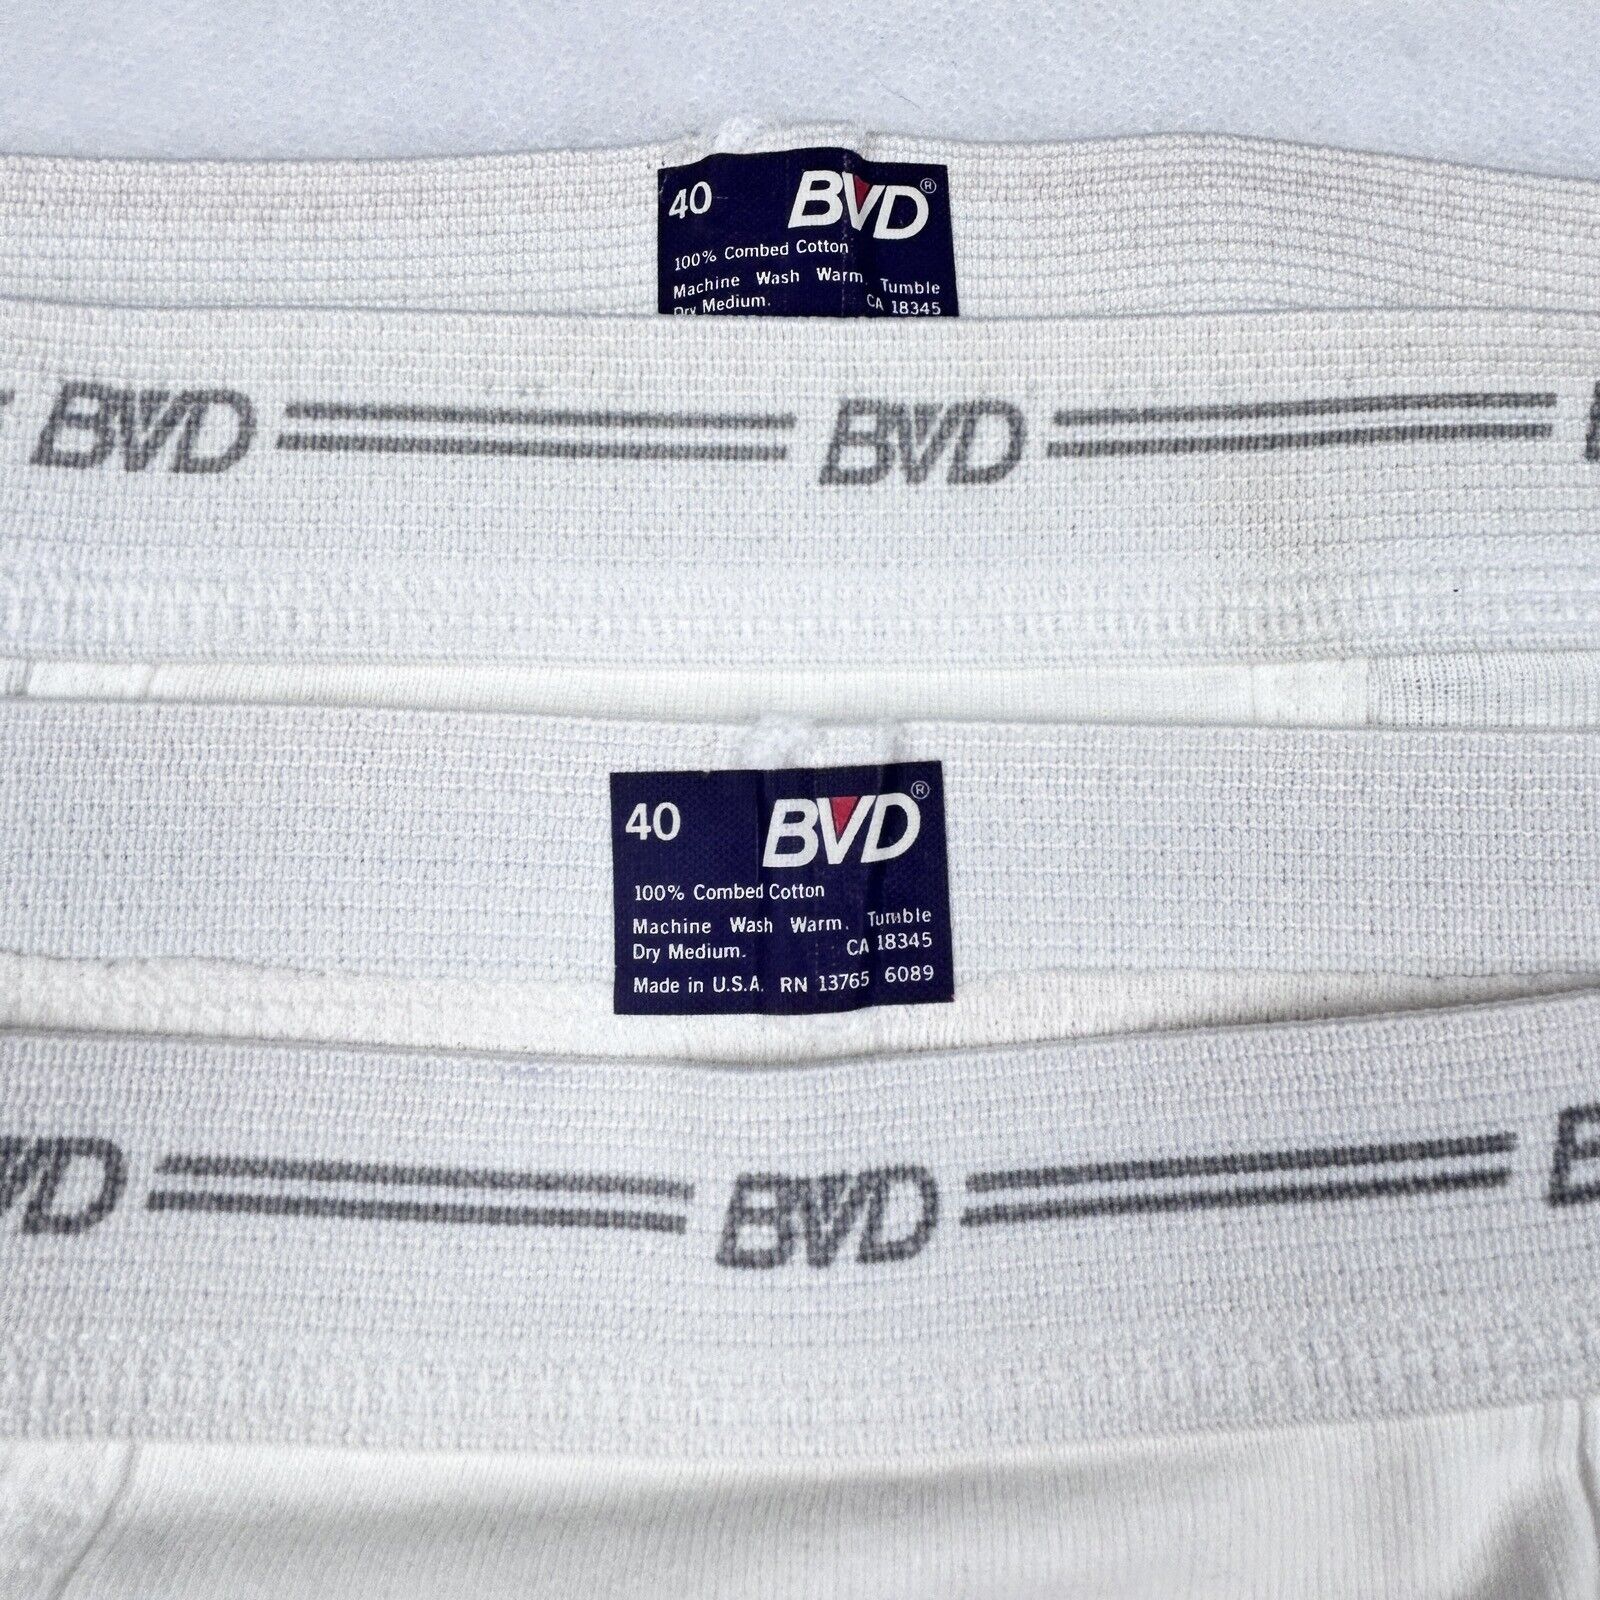 BVD Briefs Commercial (VHS Rip) (c. 1987) 